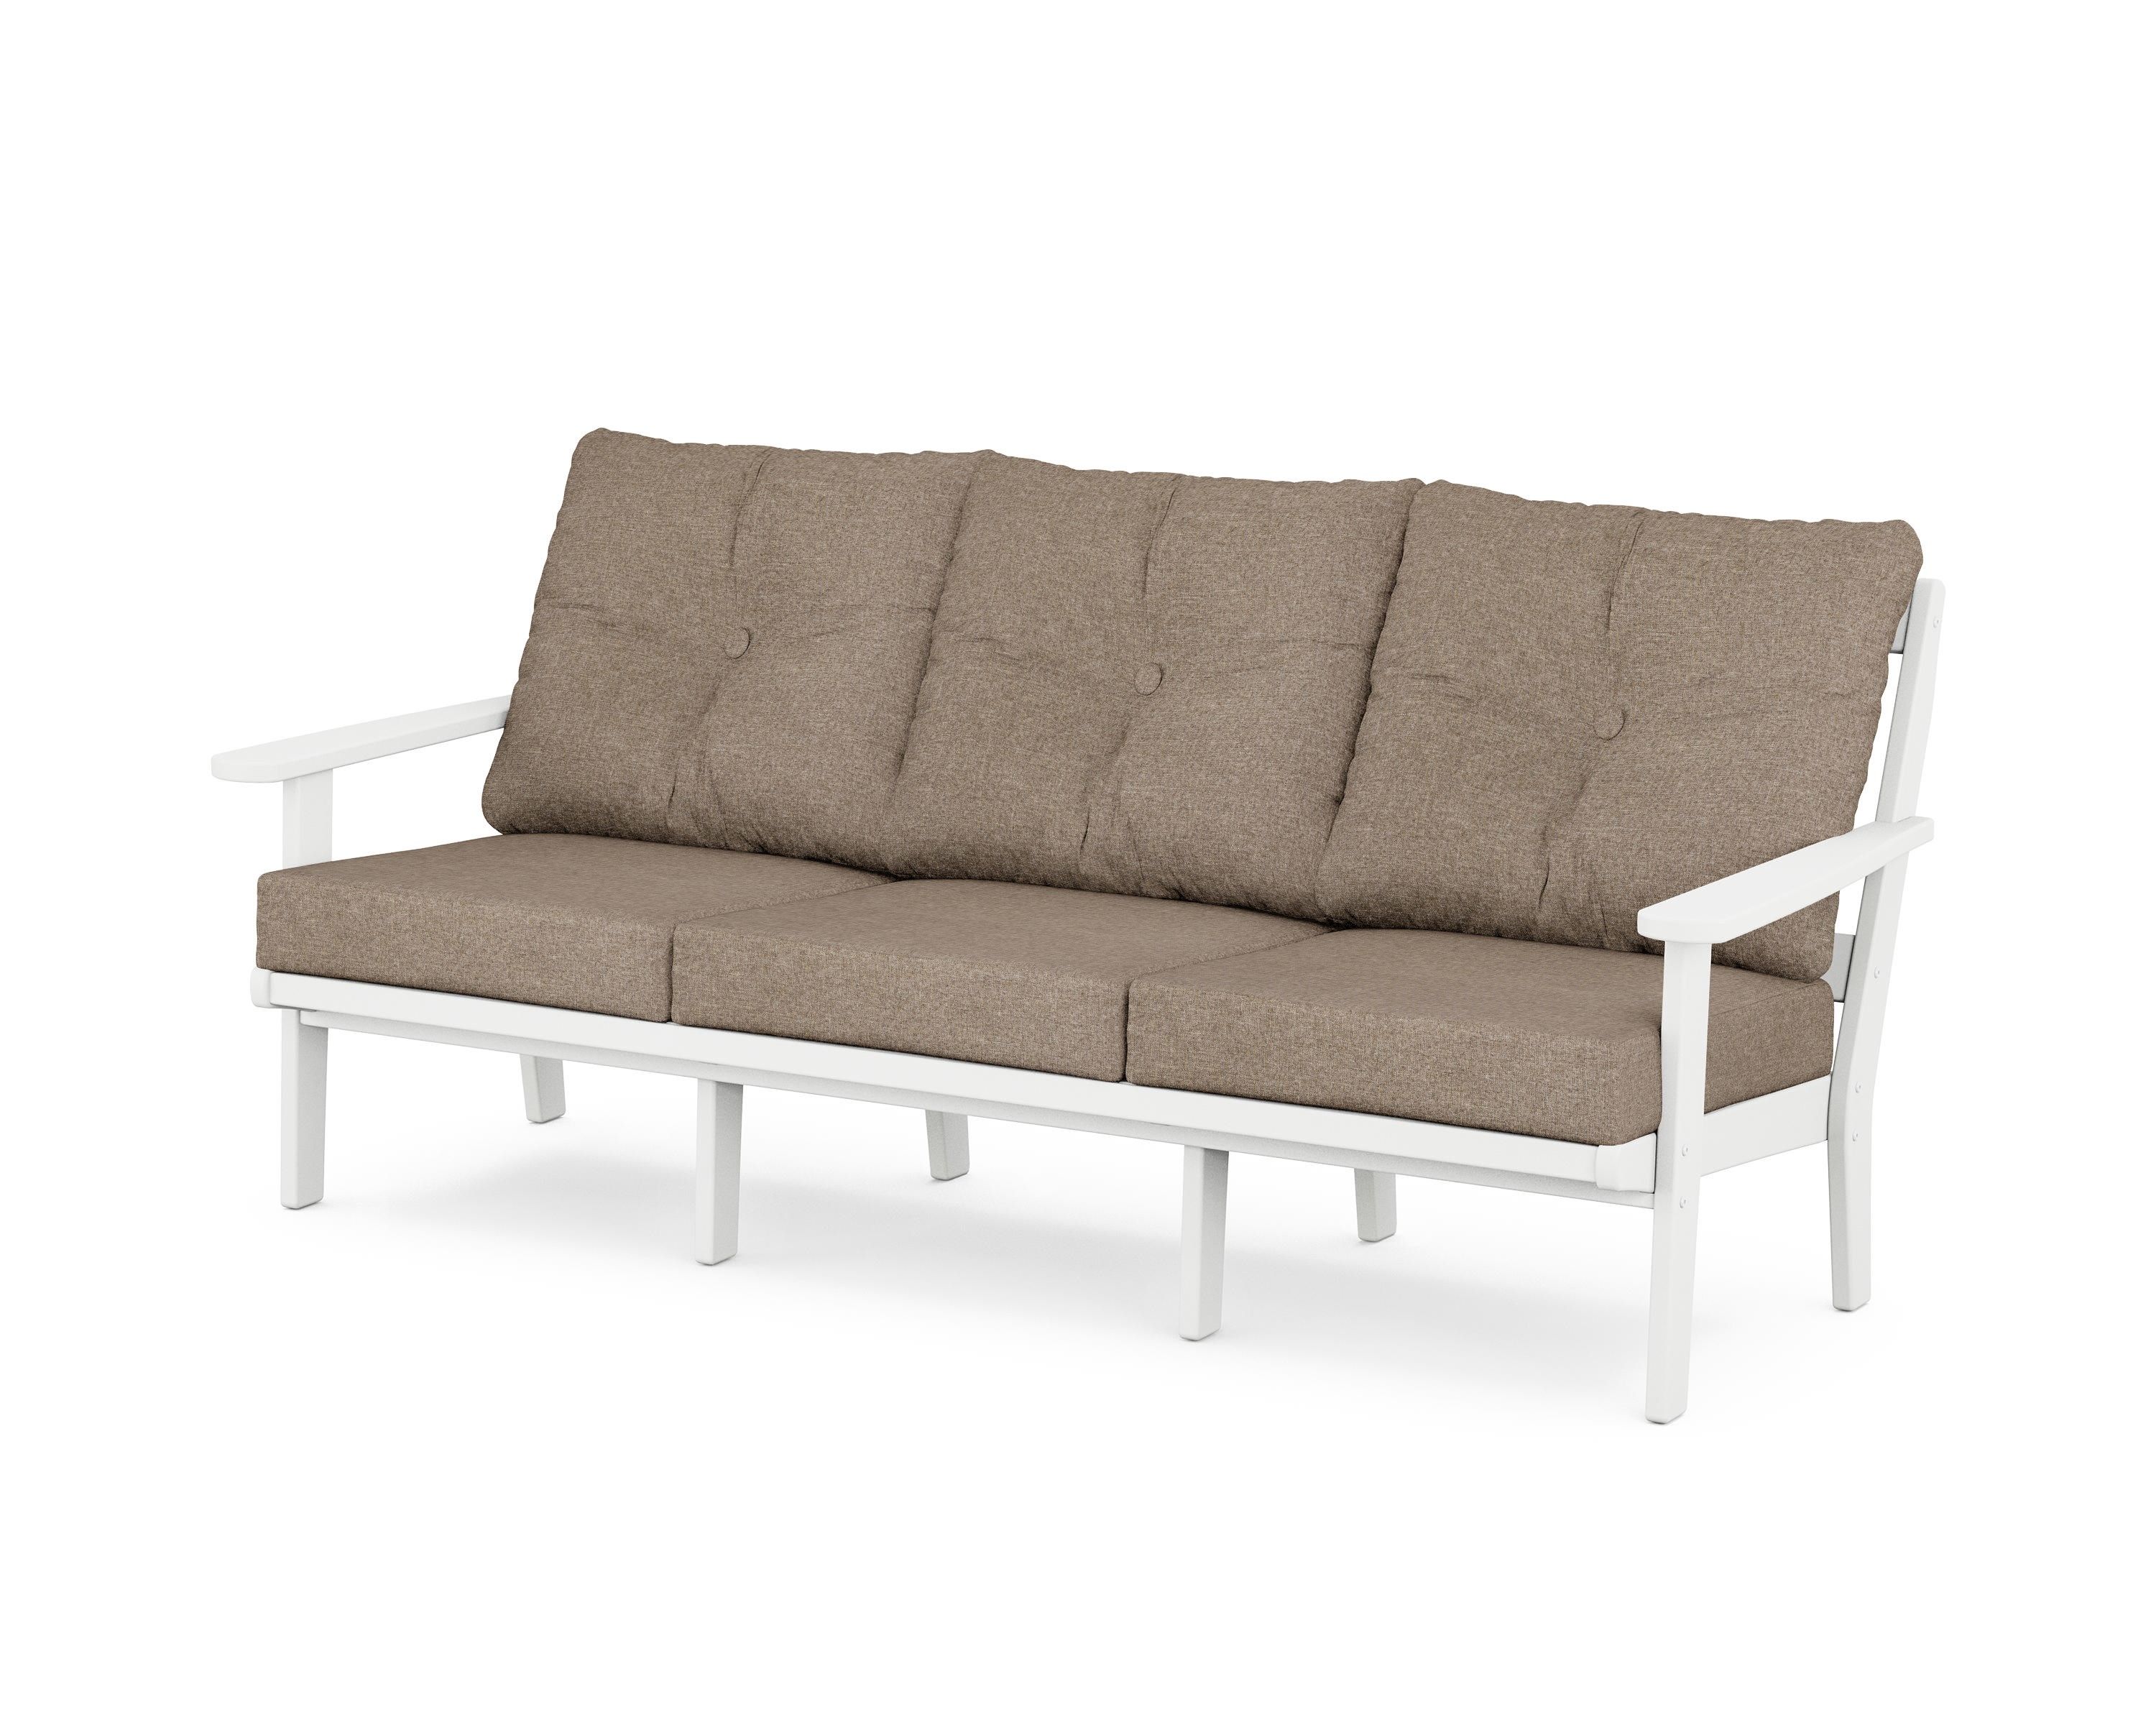 Trex Outdoor Furniture Cape Cod Deep Seating Sofa